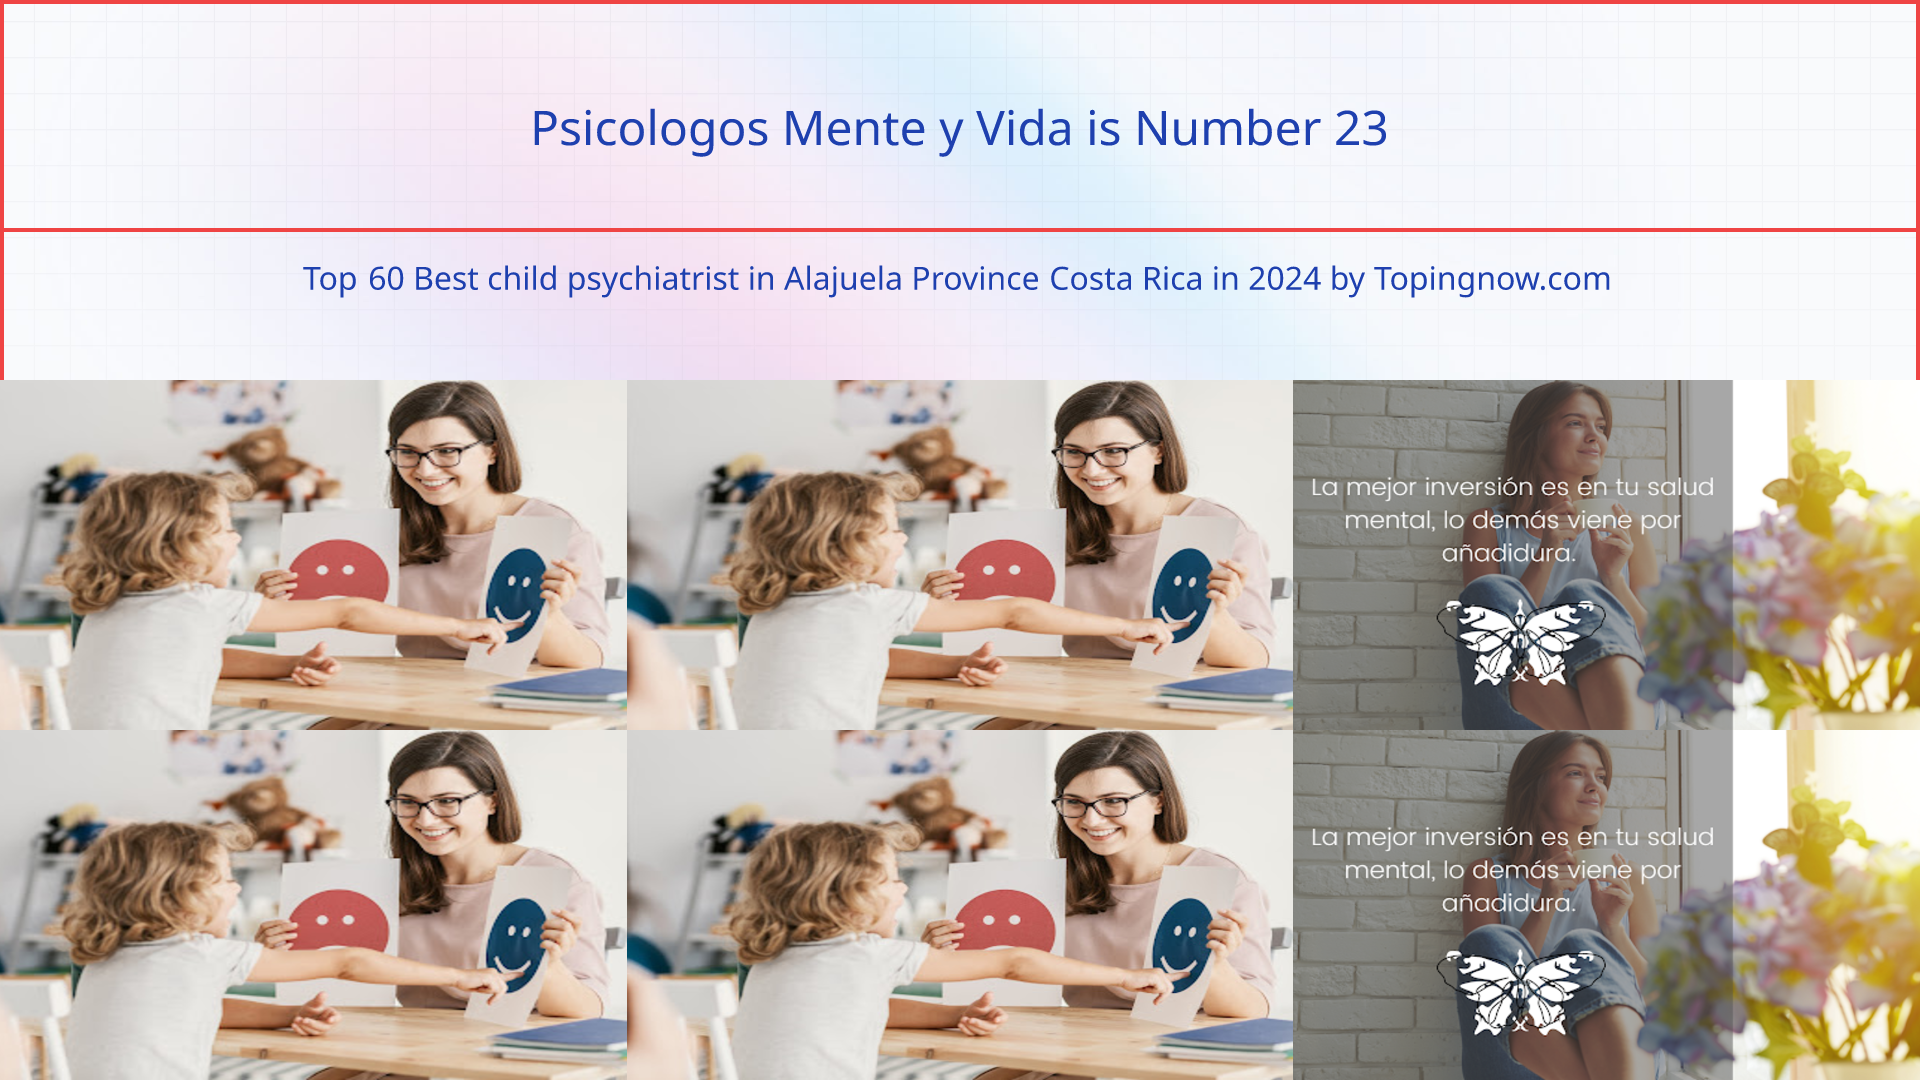 Psicologos Mente y Vida: Top 60 Best child psychiatrist in Alajuela Province Costa Rica in 2024